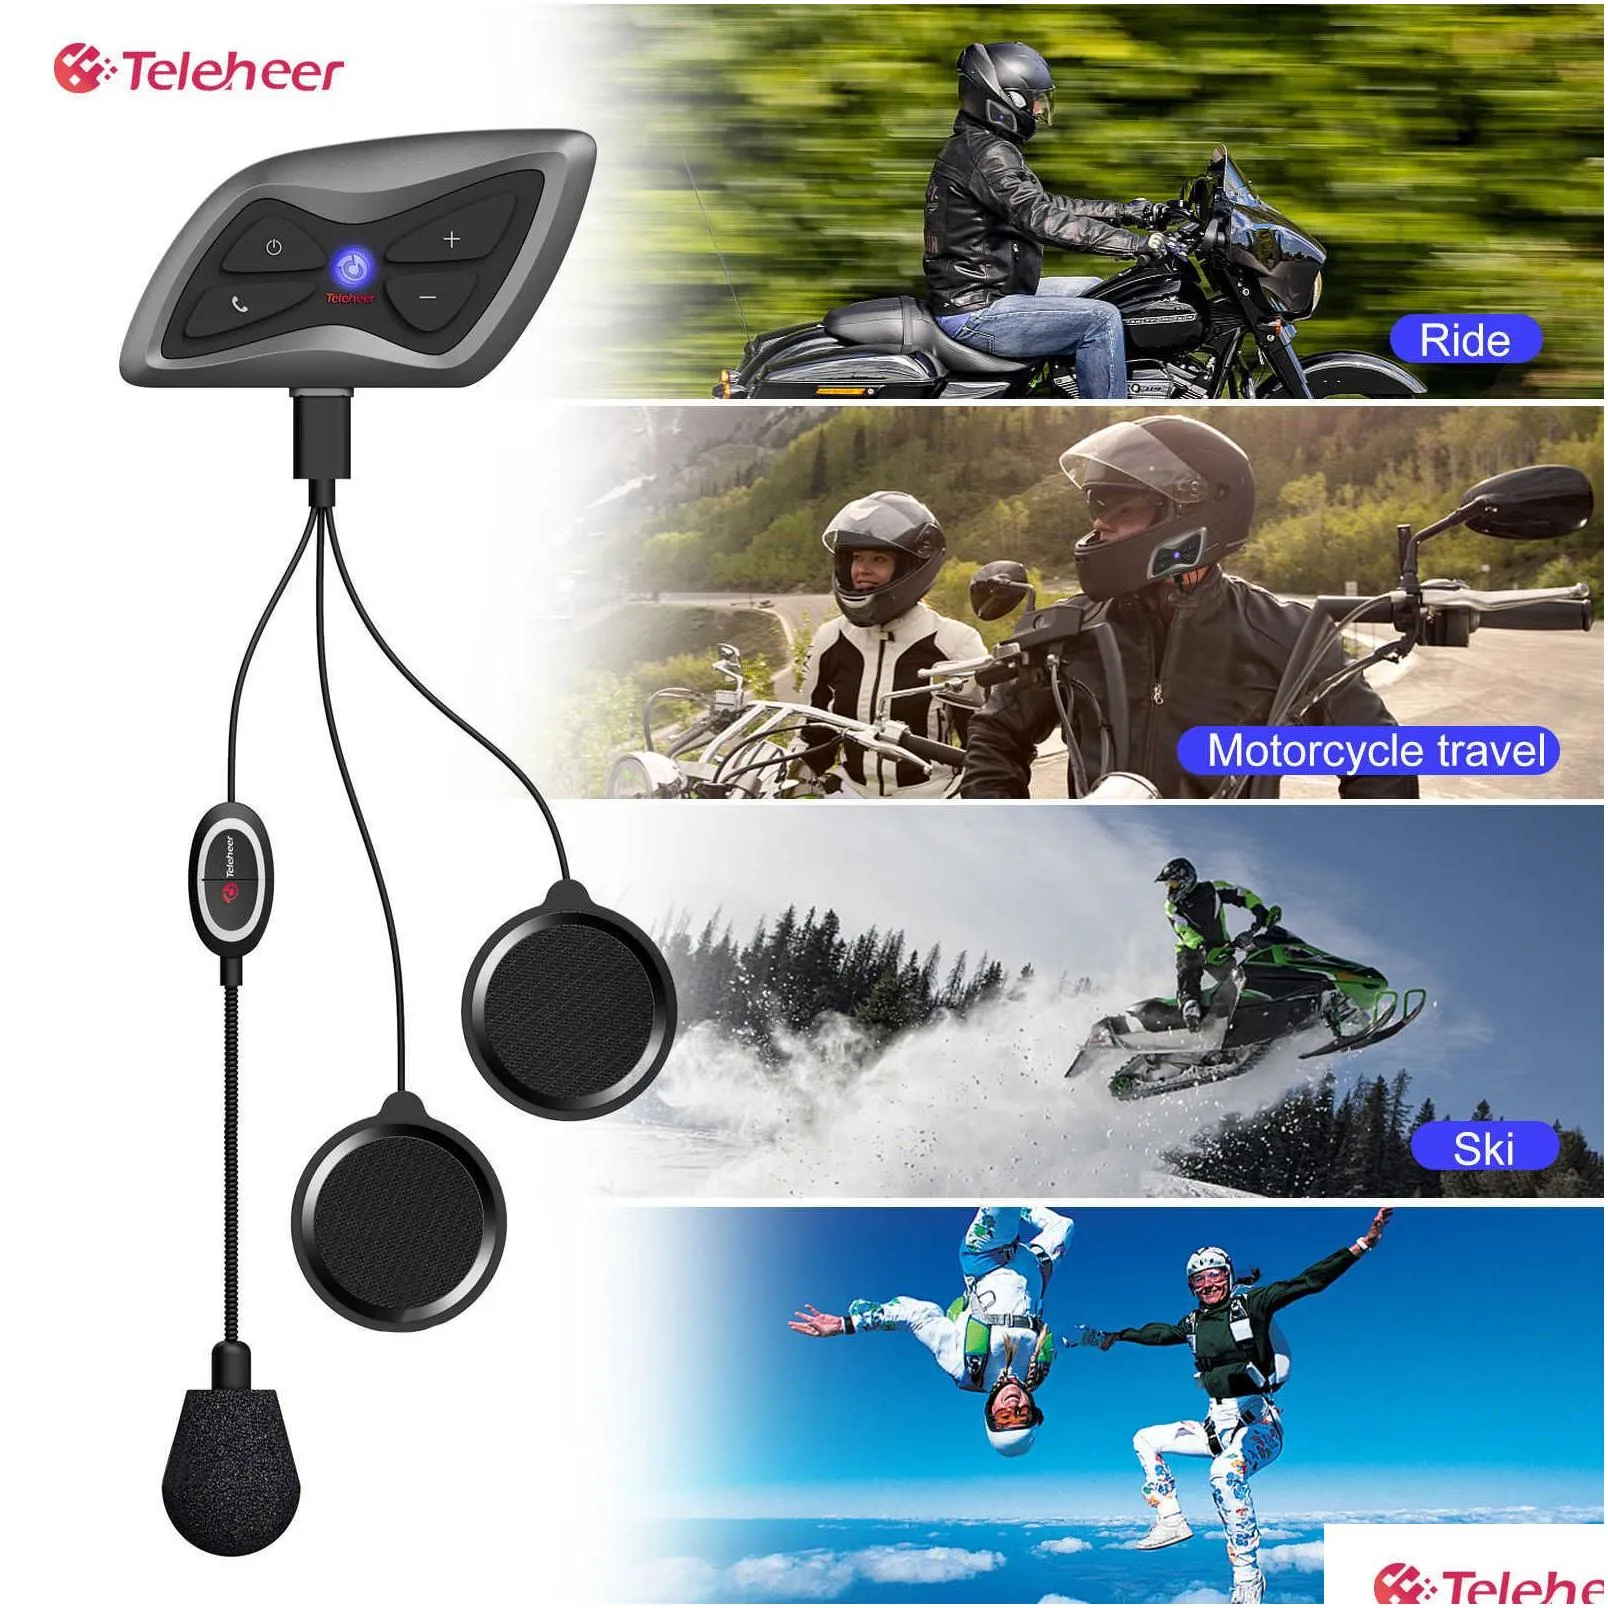 1Pcs/Set Teleheer Intercom T6 Plus Bluetooth Headset Motorcycle Helmet 1500M Intercomunicador Moto Real-time For 2 Riders Waterproof